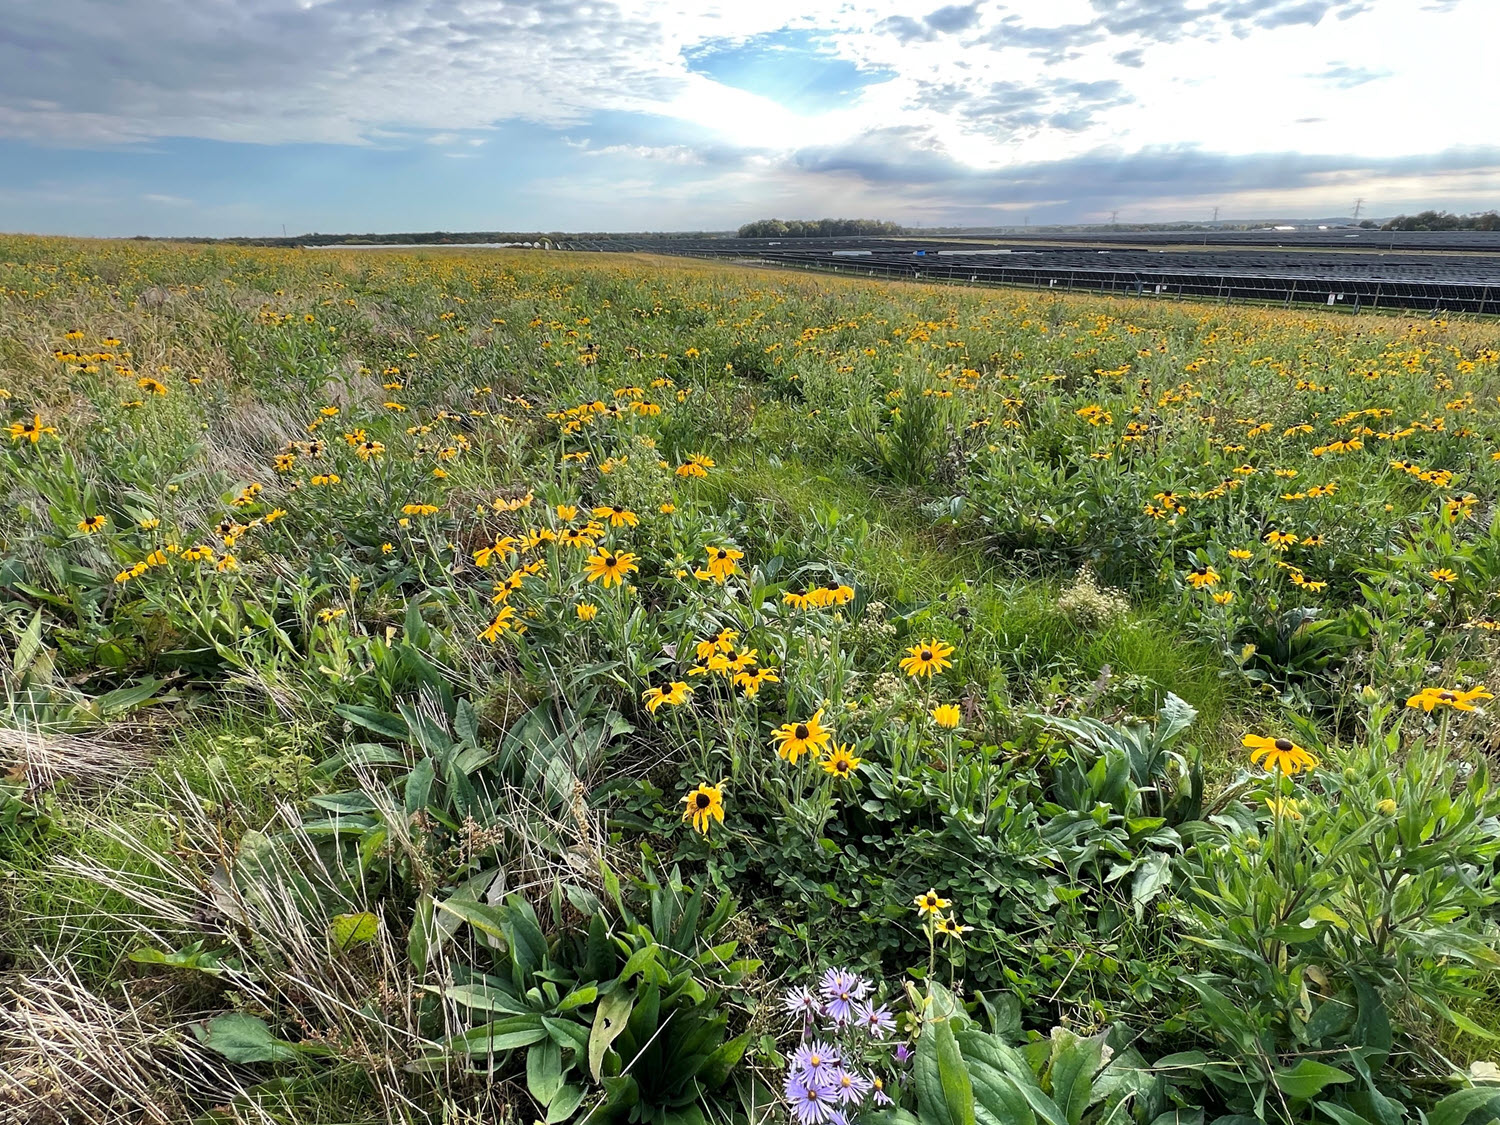 North Rock solar pollinator area - flowers in a field